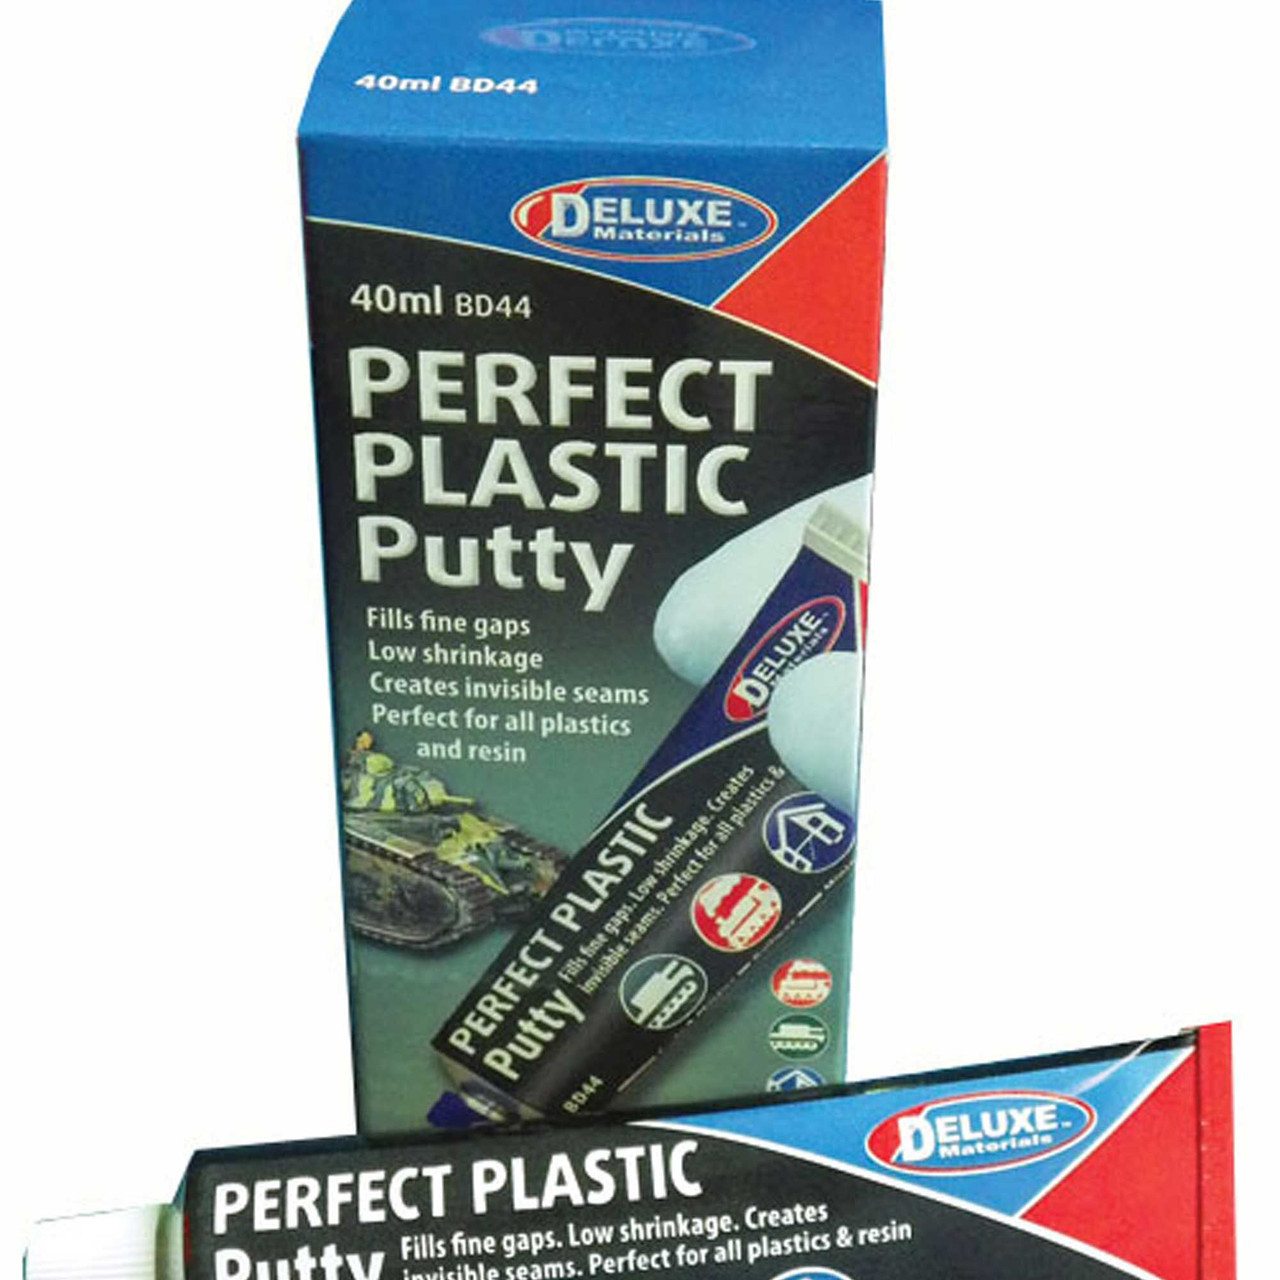 Perfect Plastic Putty, 40ml - BD44